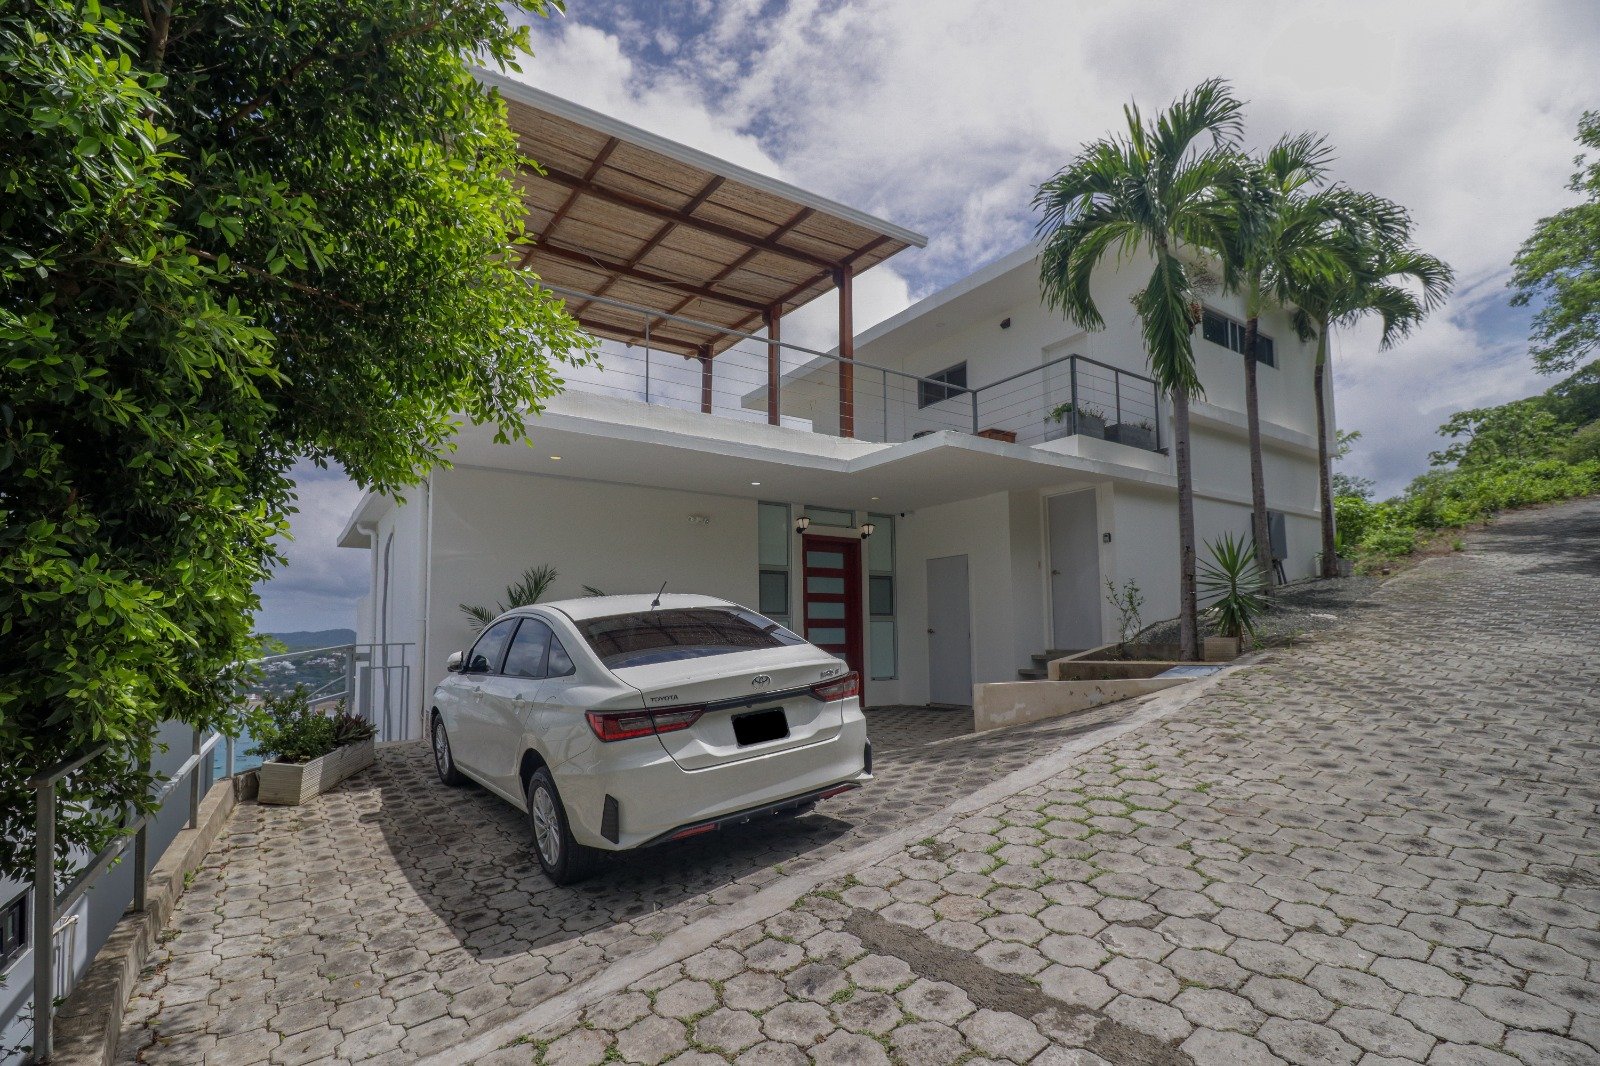 Two bedroom ocean view home for sale property real estate San Juan Del Sur (2).jpeg